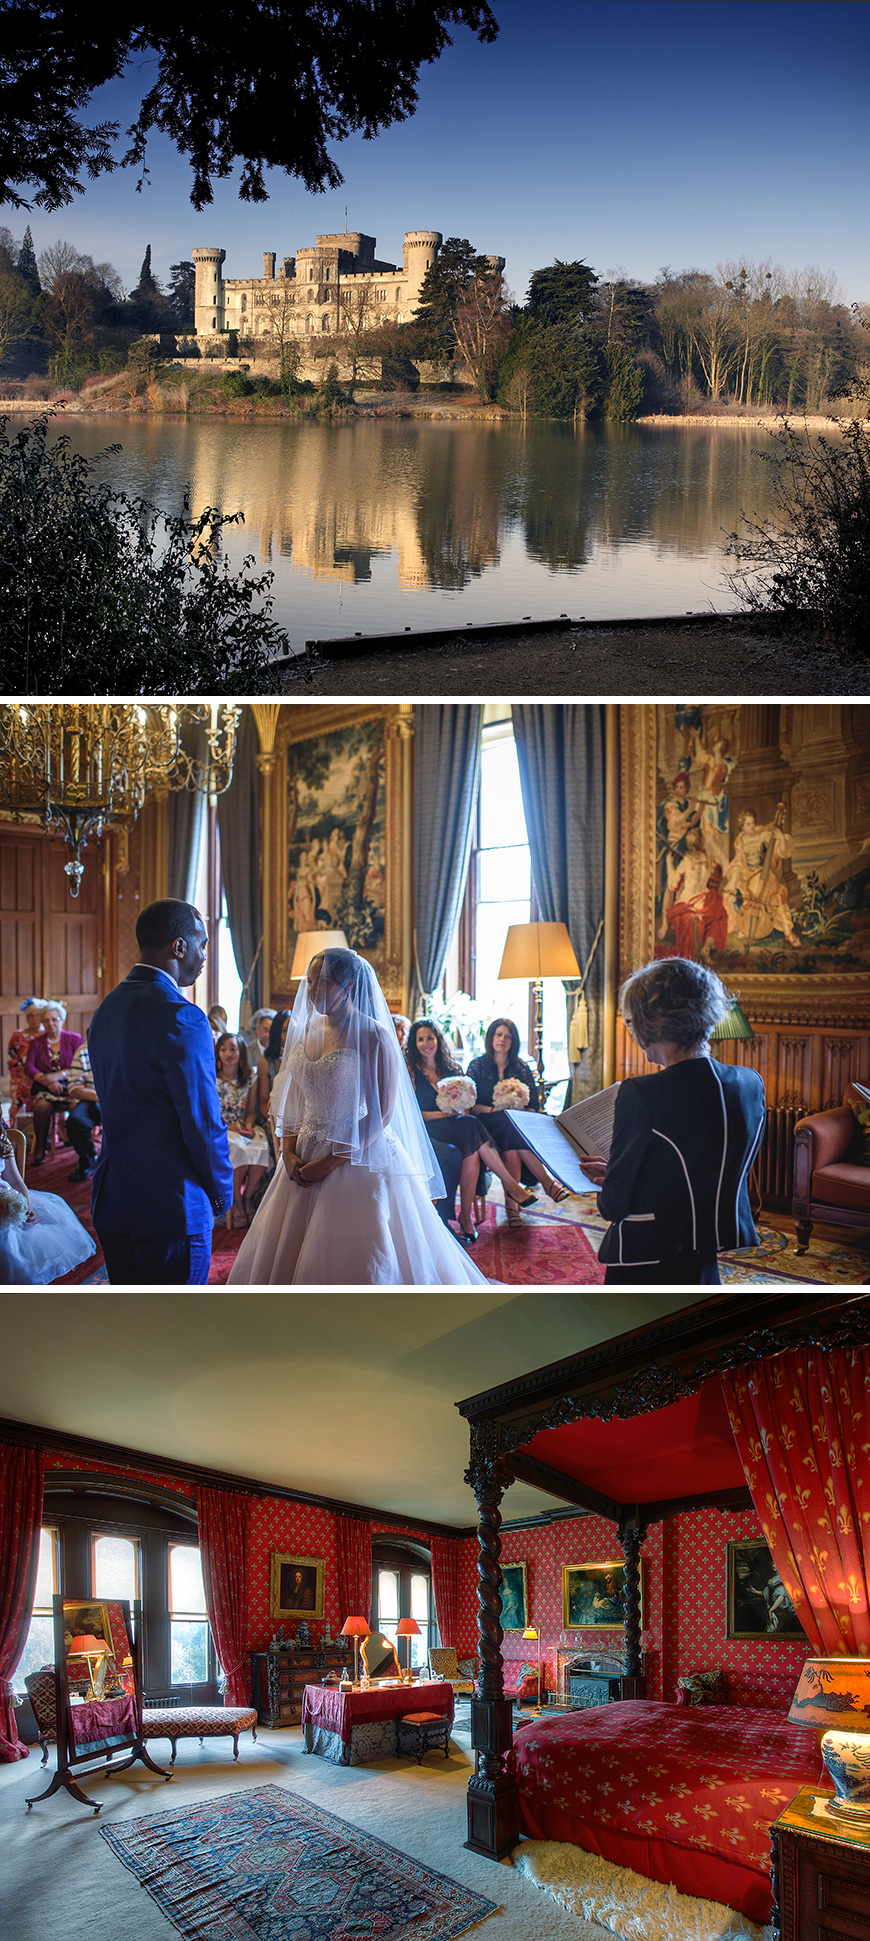 Beauty and the beast themed wedding ideas - Eastnor Castle | CHWV